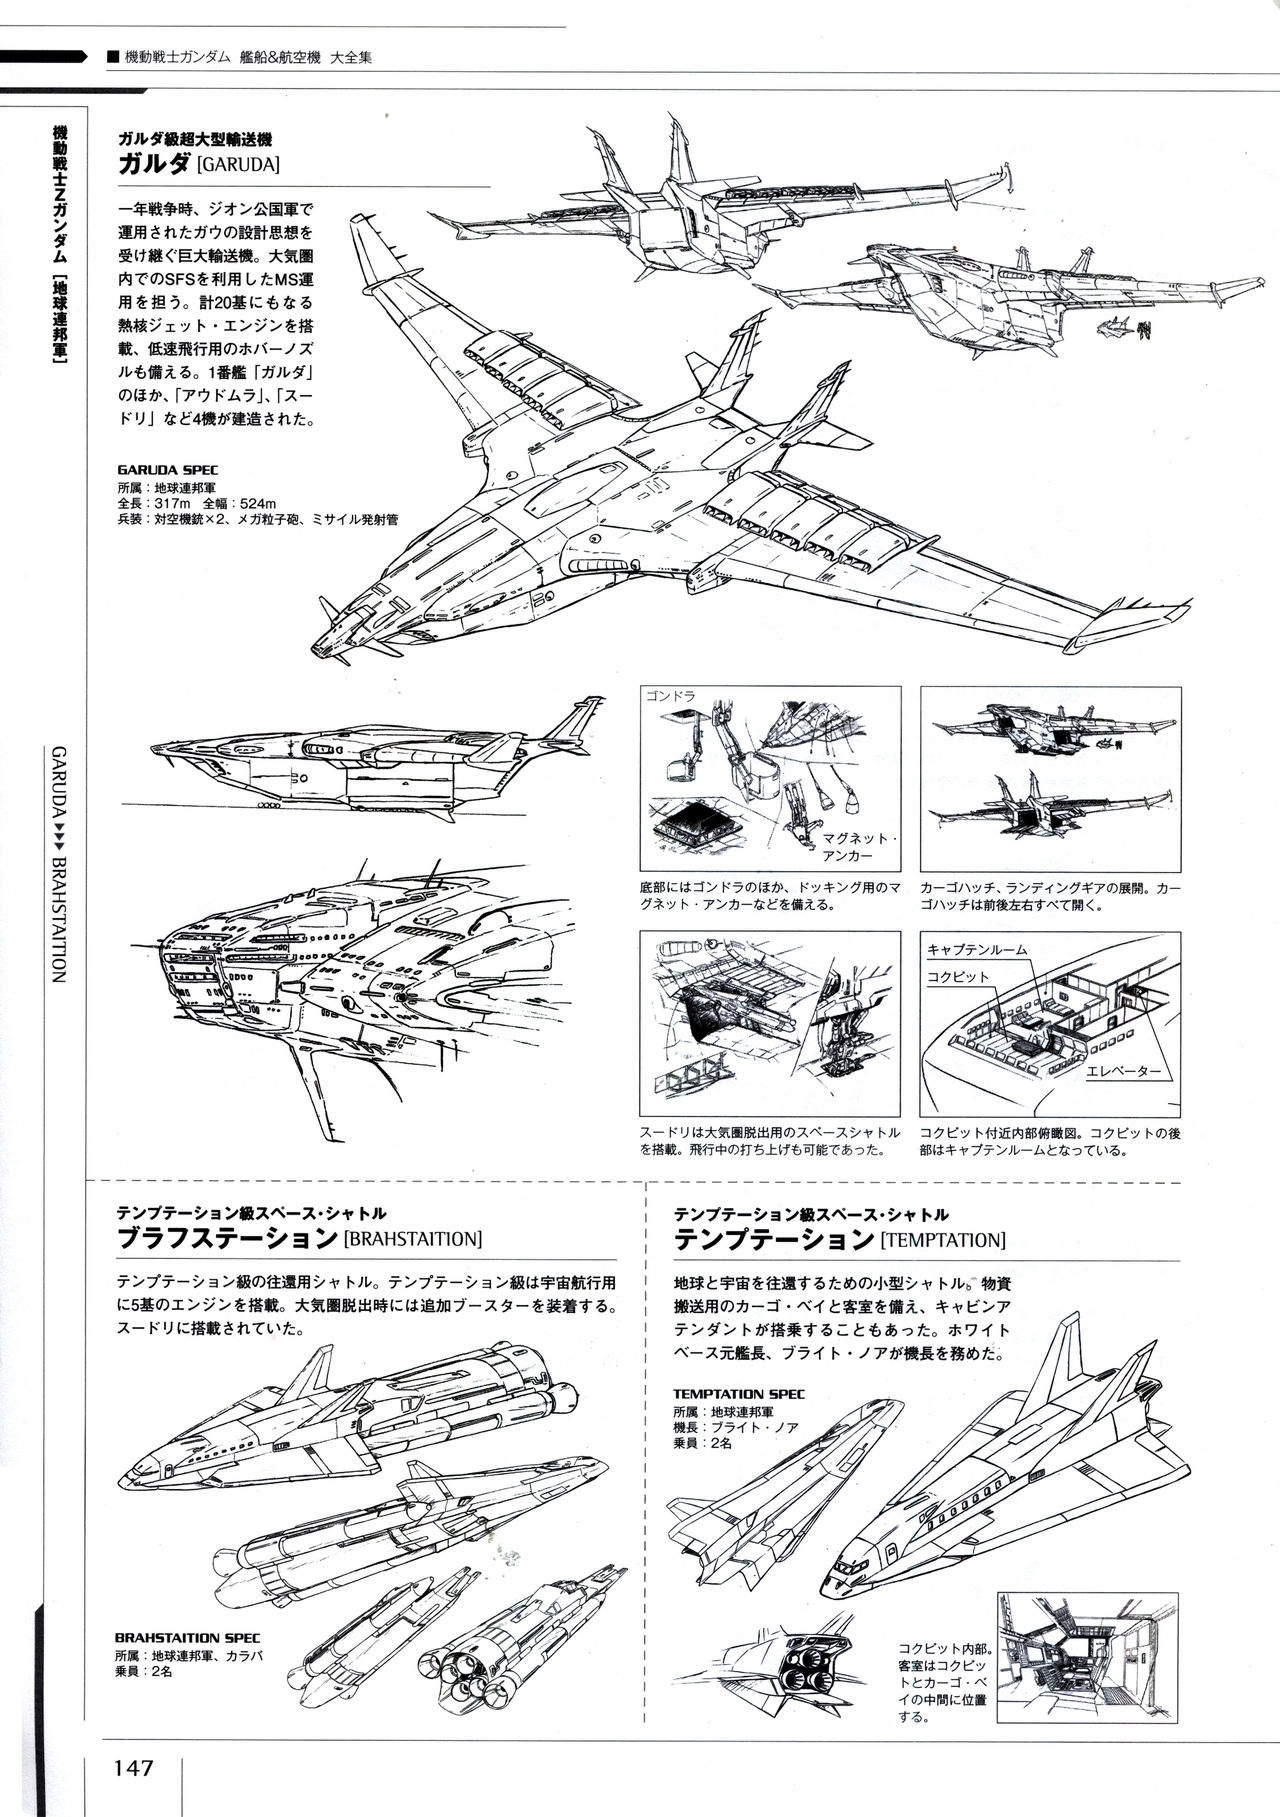 Mobile Suit Gundam - Ship & Aerospace Plane Encyclopedia - Revised Edition 152